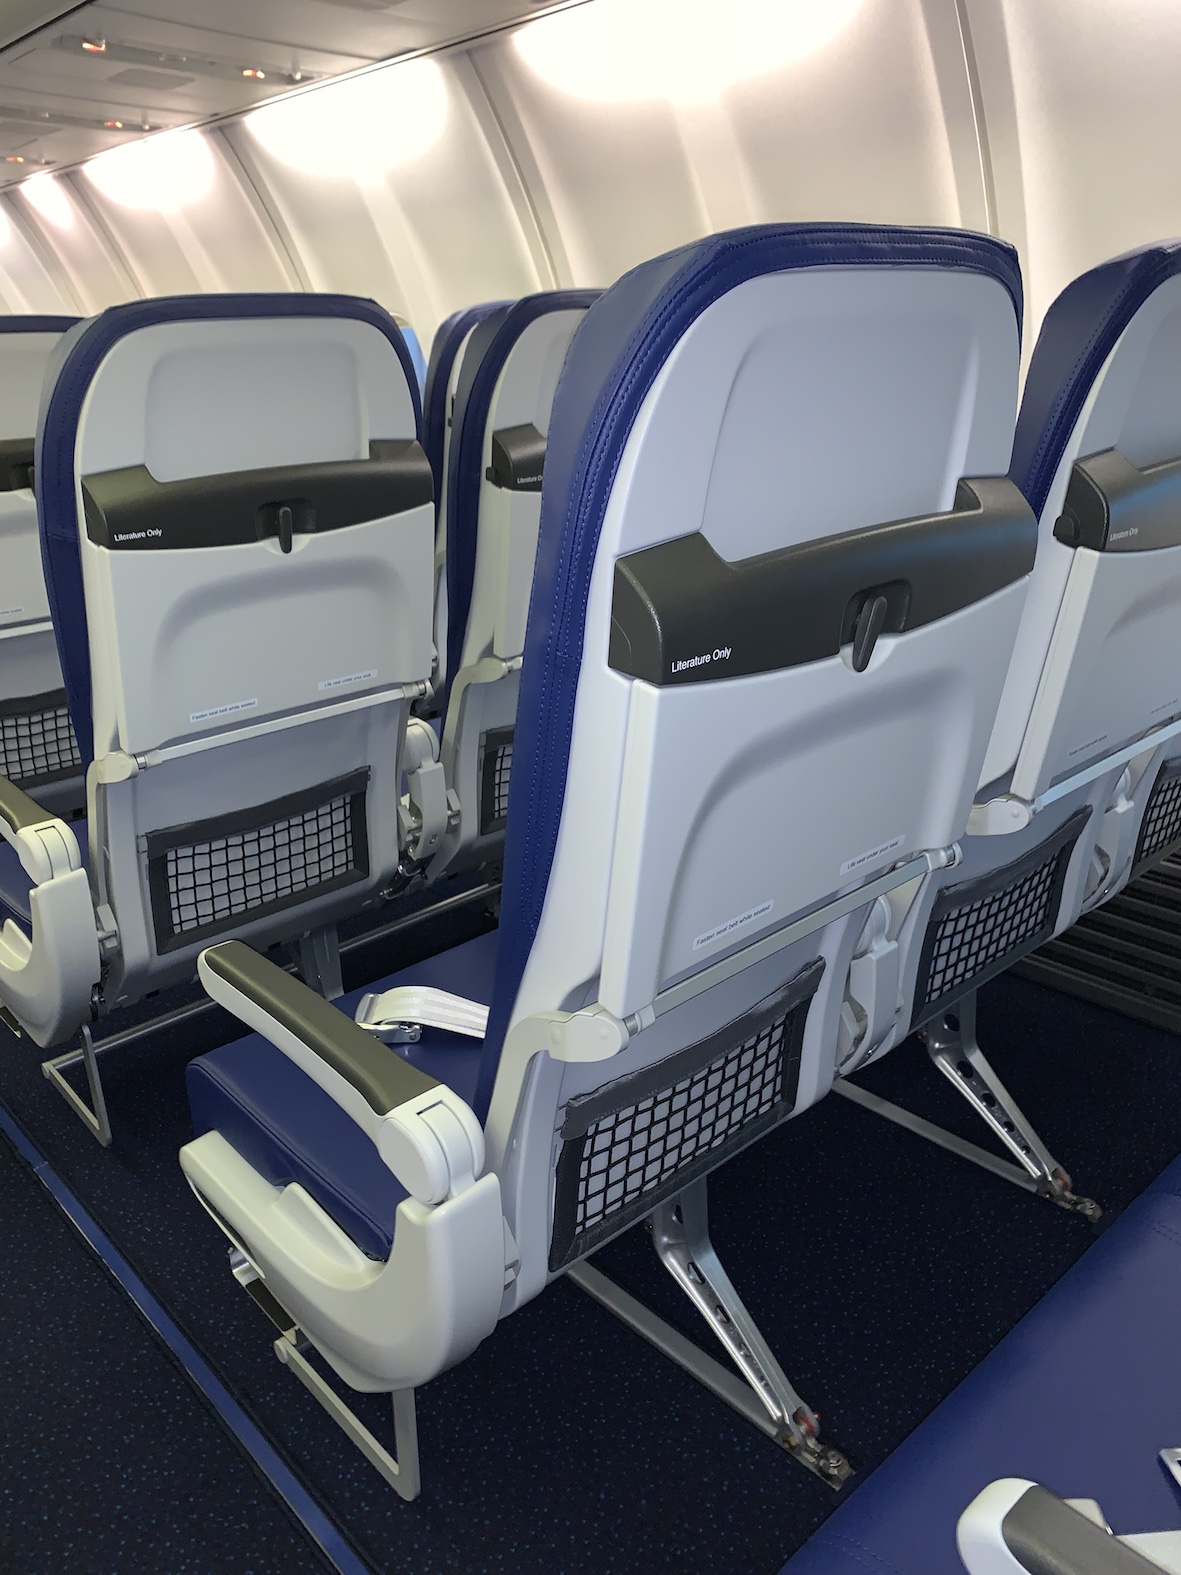 Recaro Aircraft Seating installs first seats from SPRINT program